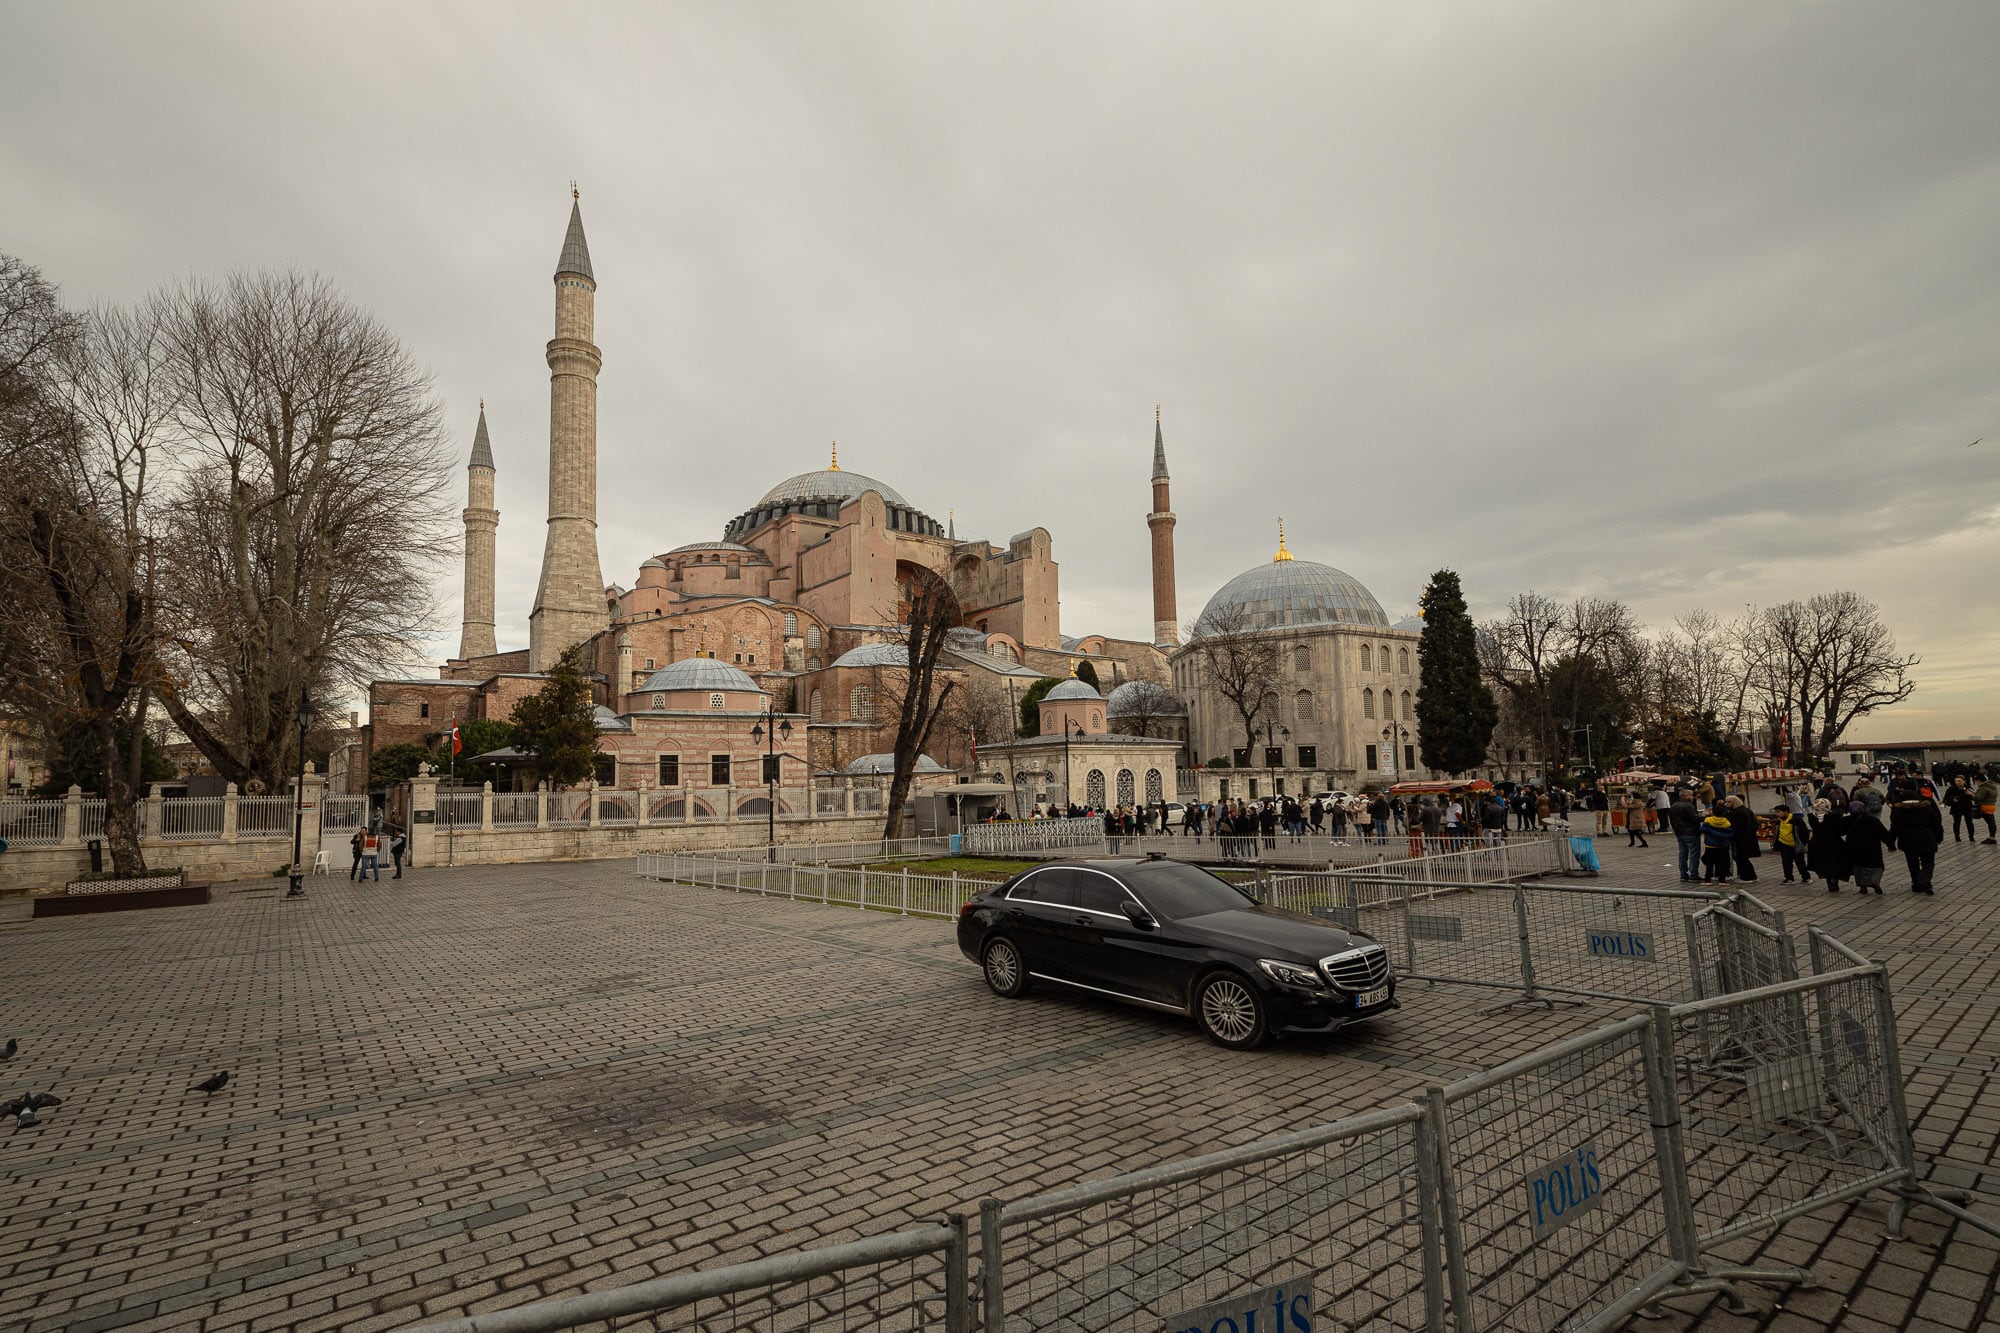 The Hagia Sophia from outside